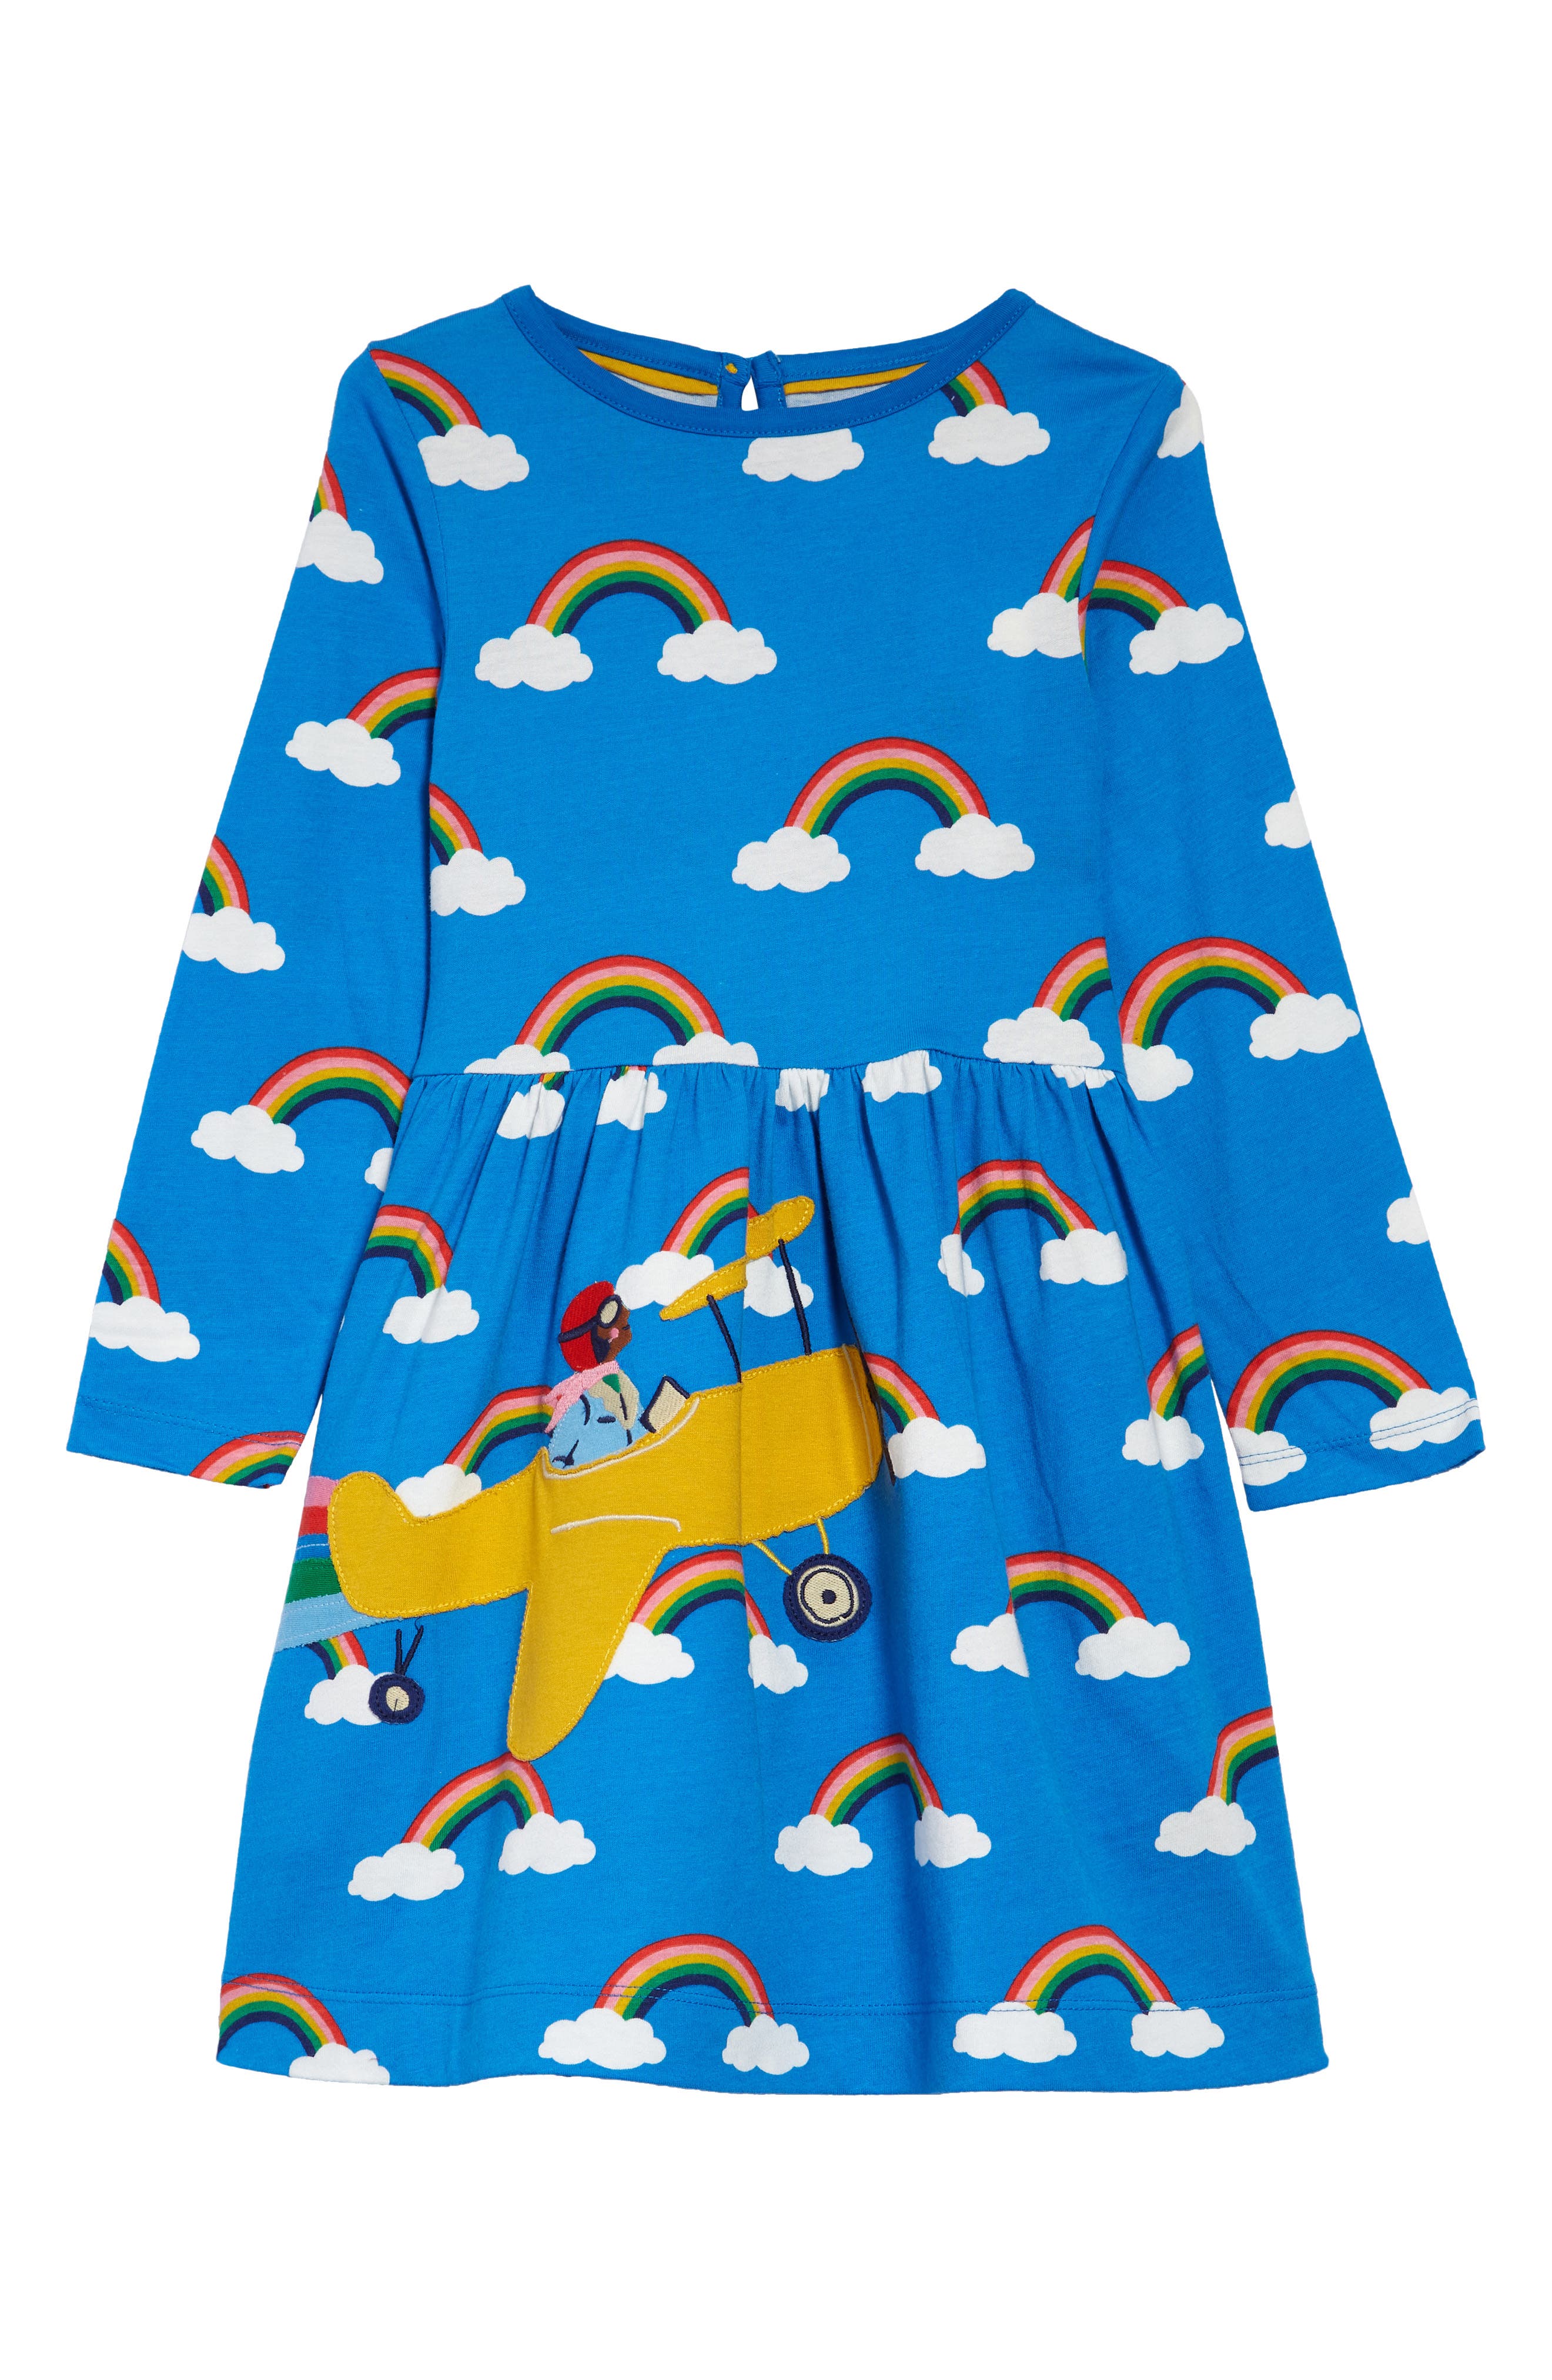 Details about   NWOT Mini Boden Girls Retro Striped Stripy Rainbow Jersey Applique Dress 3-4 y 